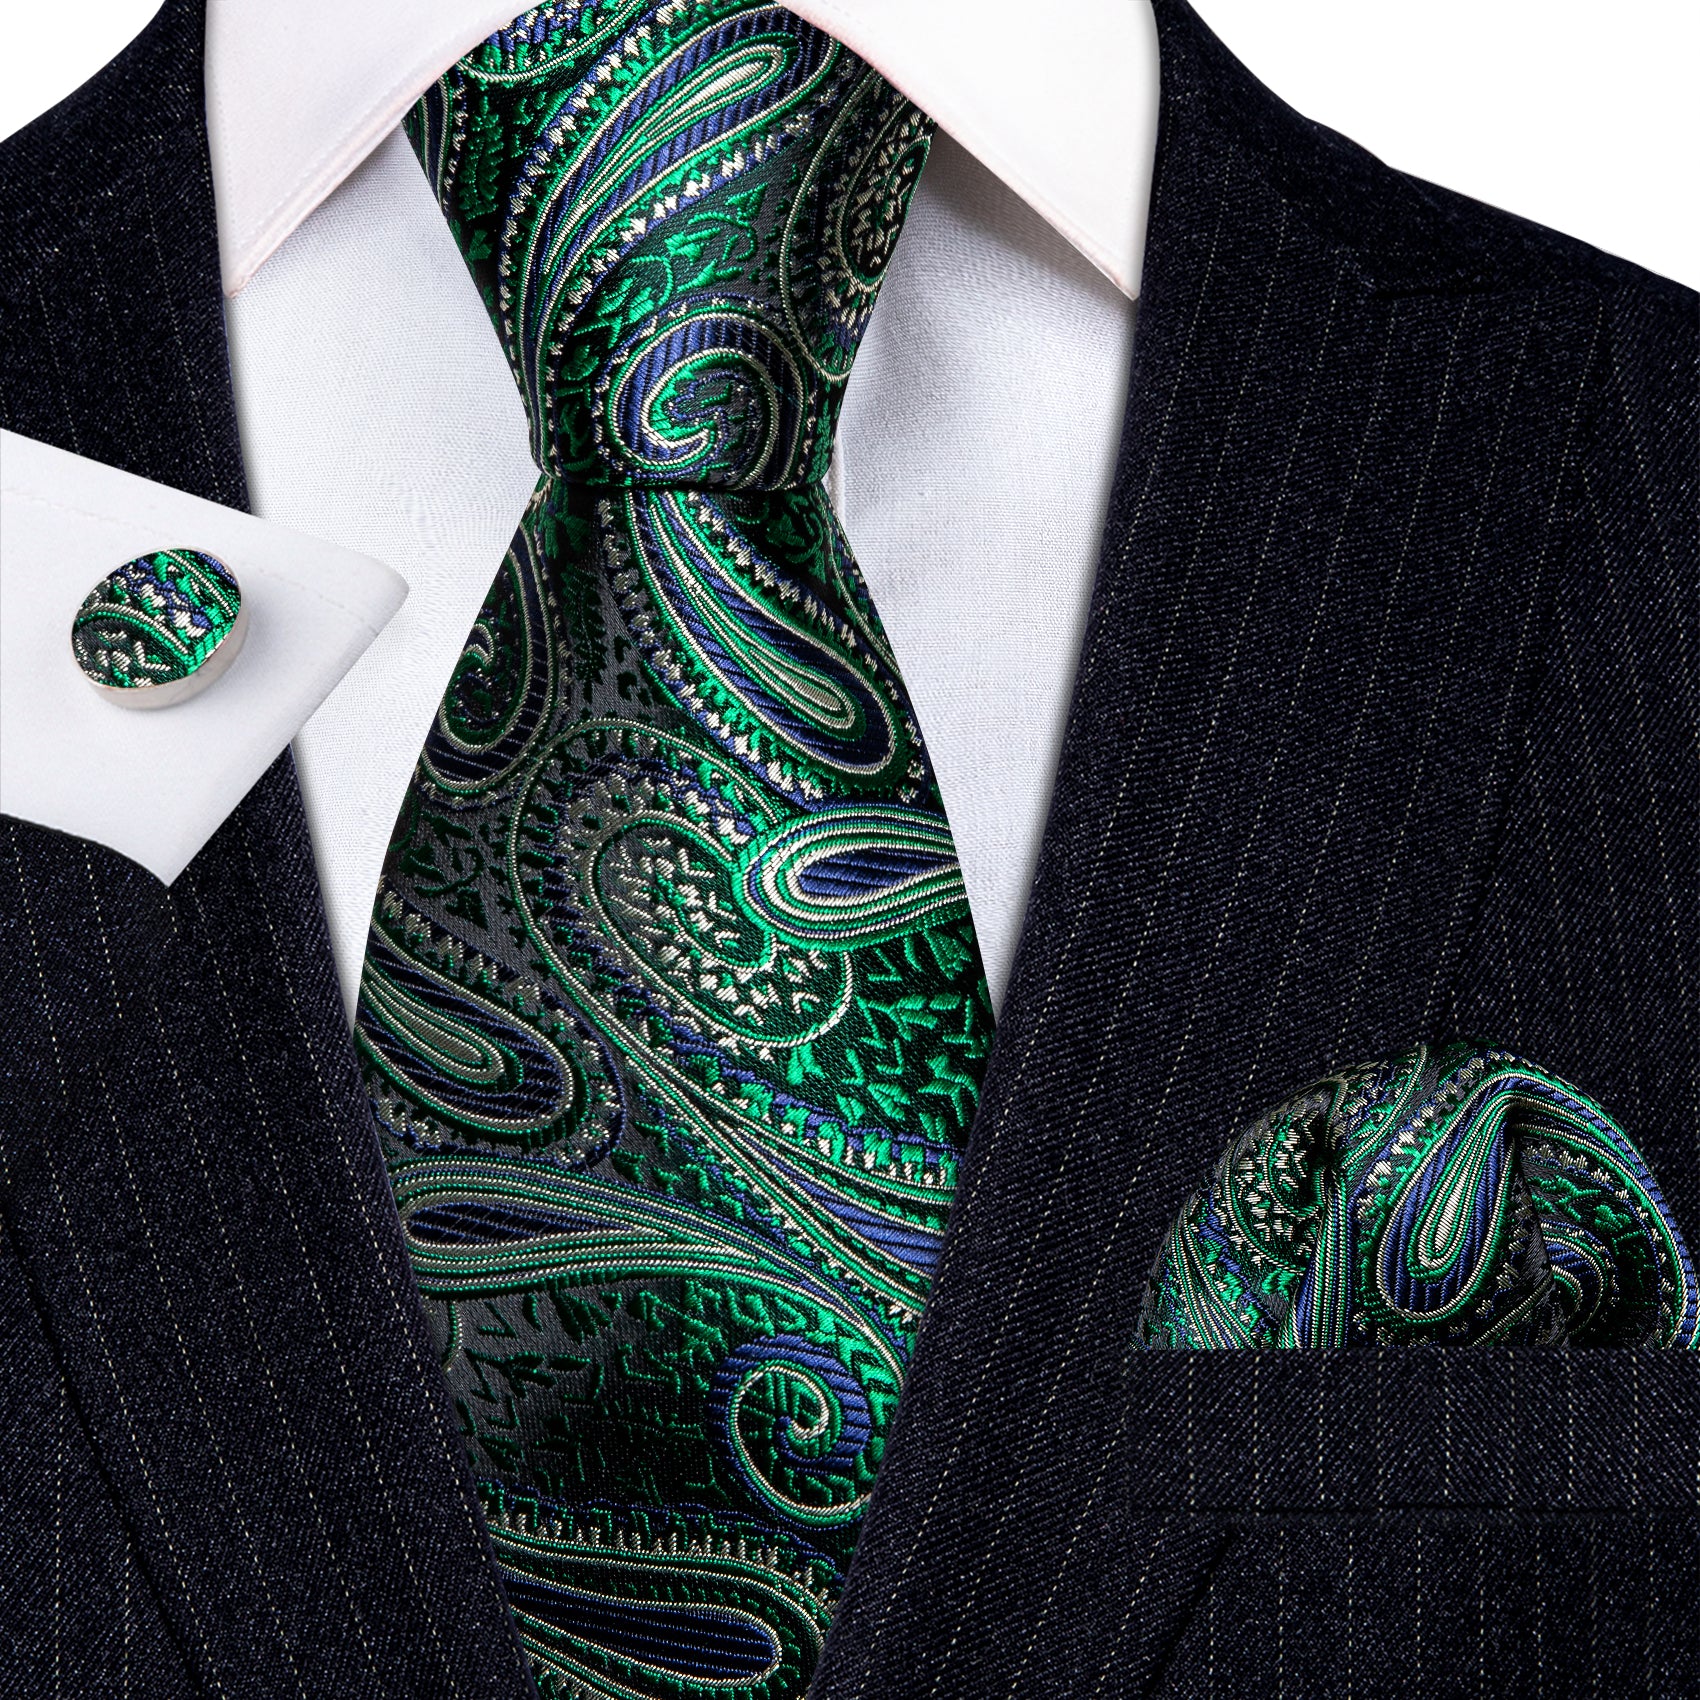 Barry.wang Green Tie Jacquard Paisley Silk Tie Hanky Cufflinks Set